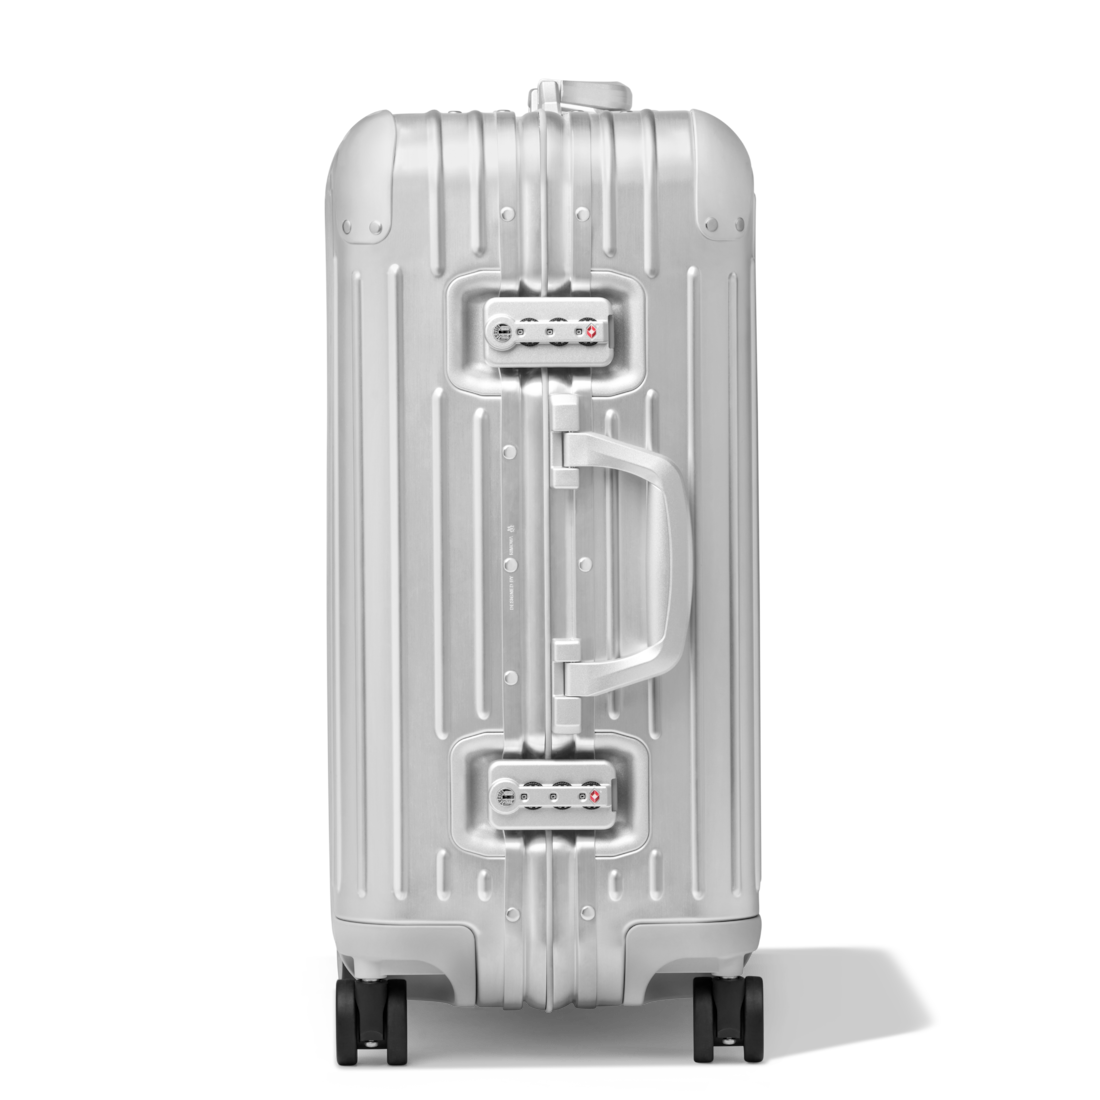 supreme luggage rimowa - OFF-69% > Shipping free